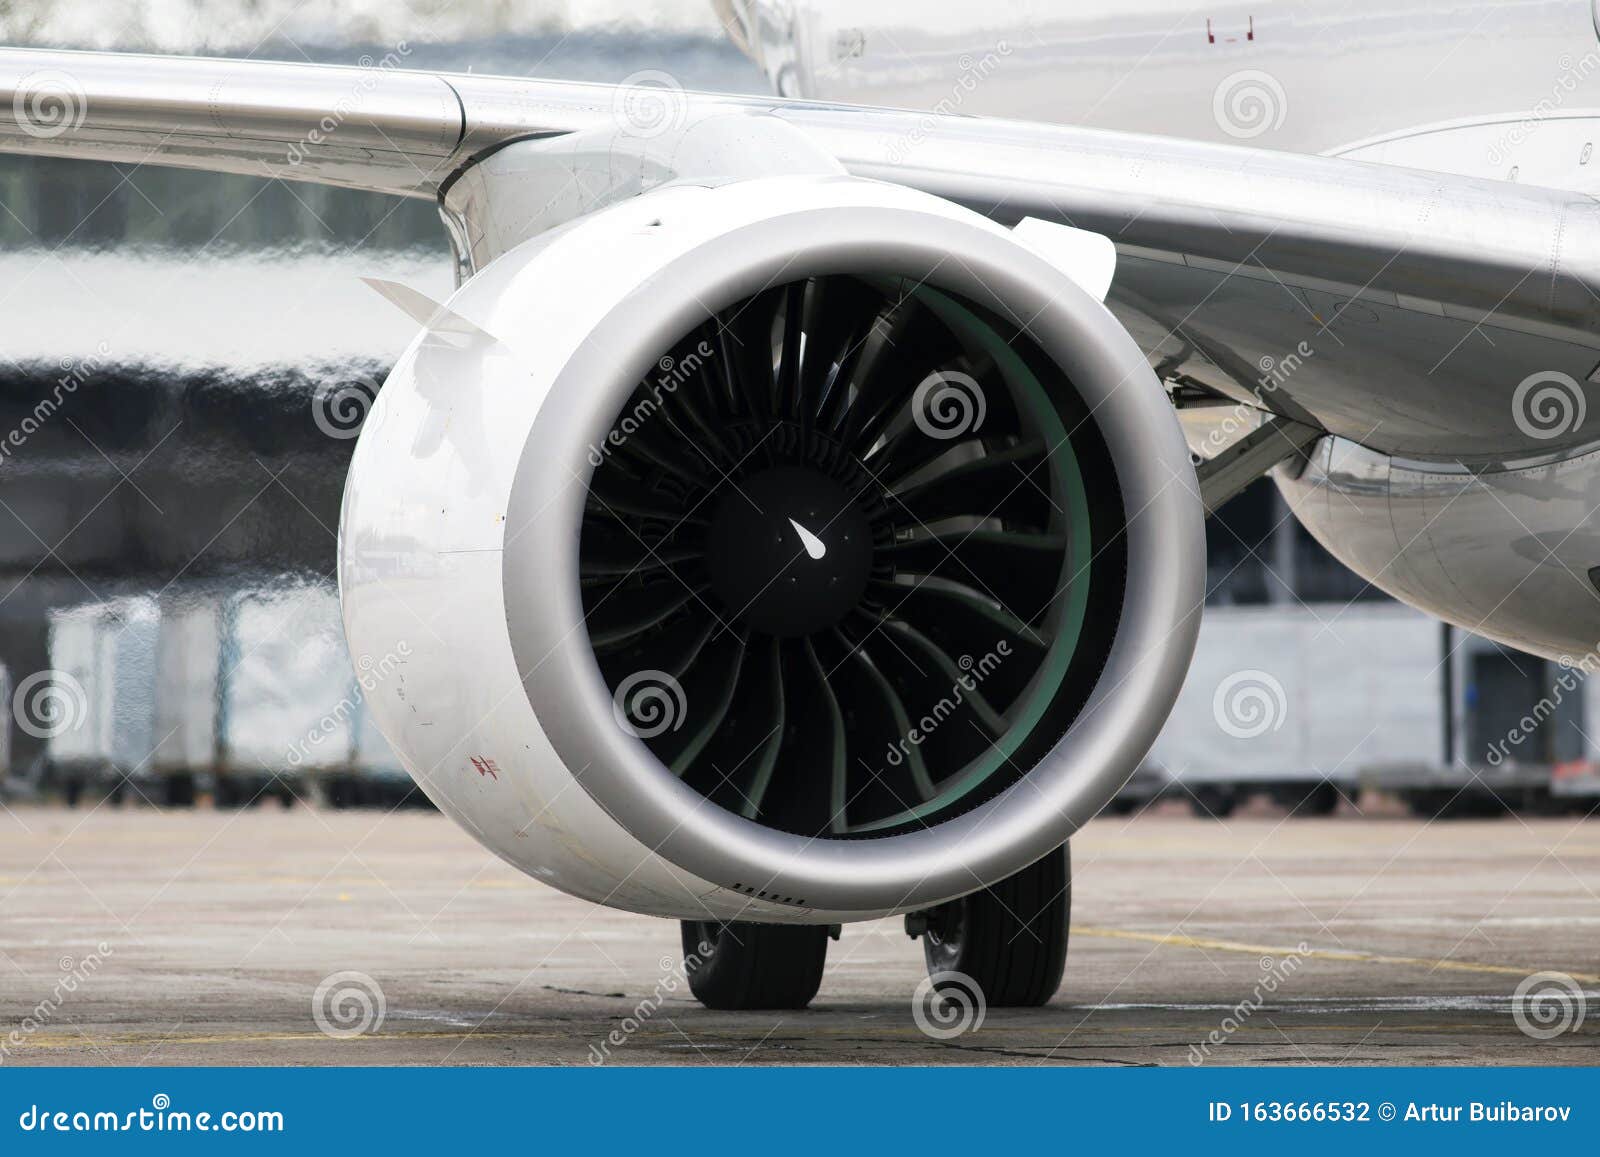 Modern Turbofan & X28;fanjet& X29; Airplane Engine. Airbreathing Jet Engine  Stock Photo - Image of plane, turbo: 163666532